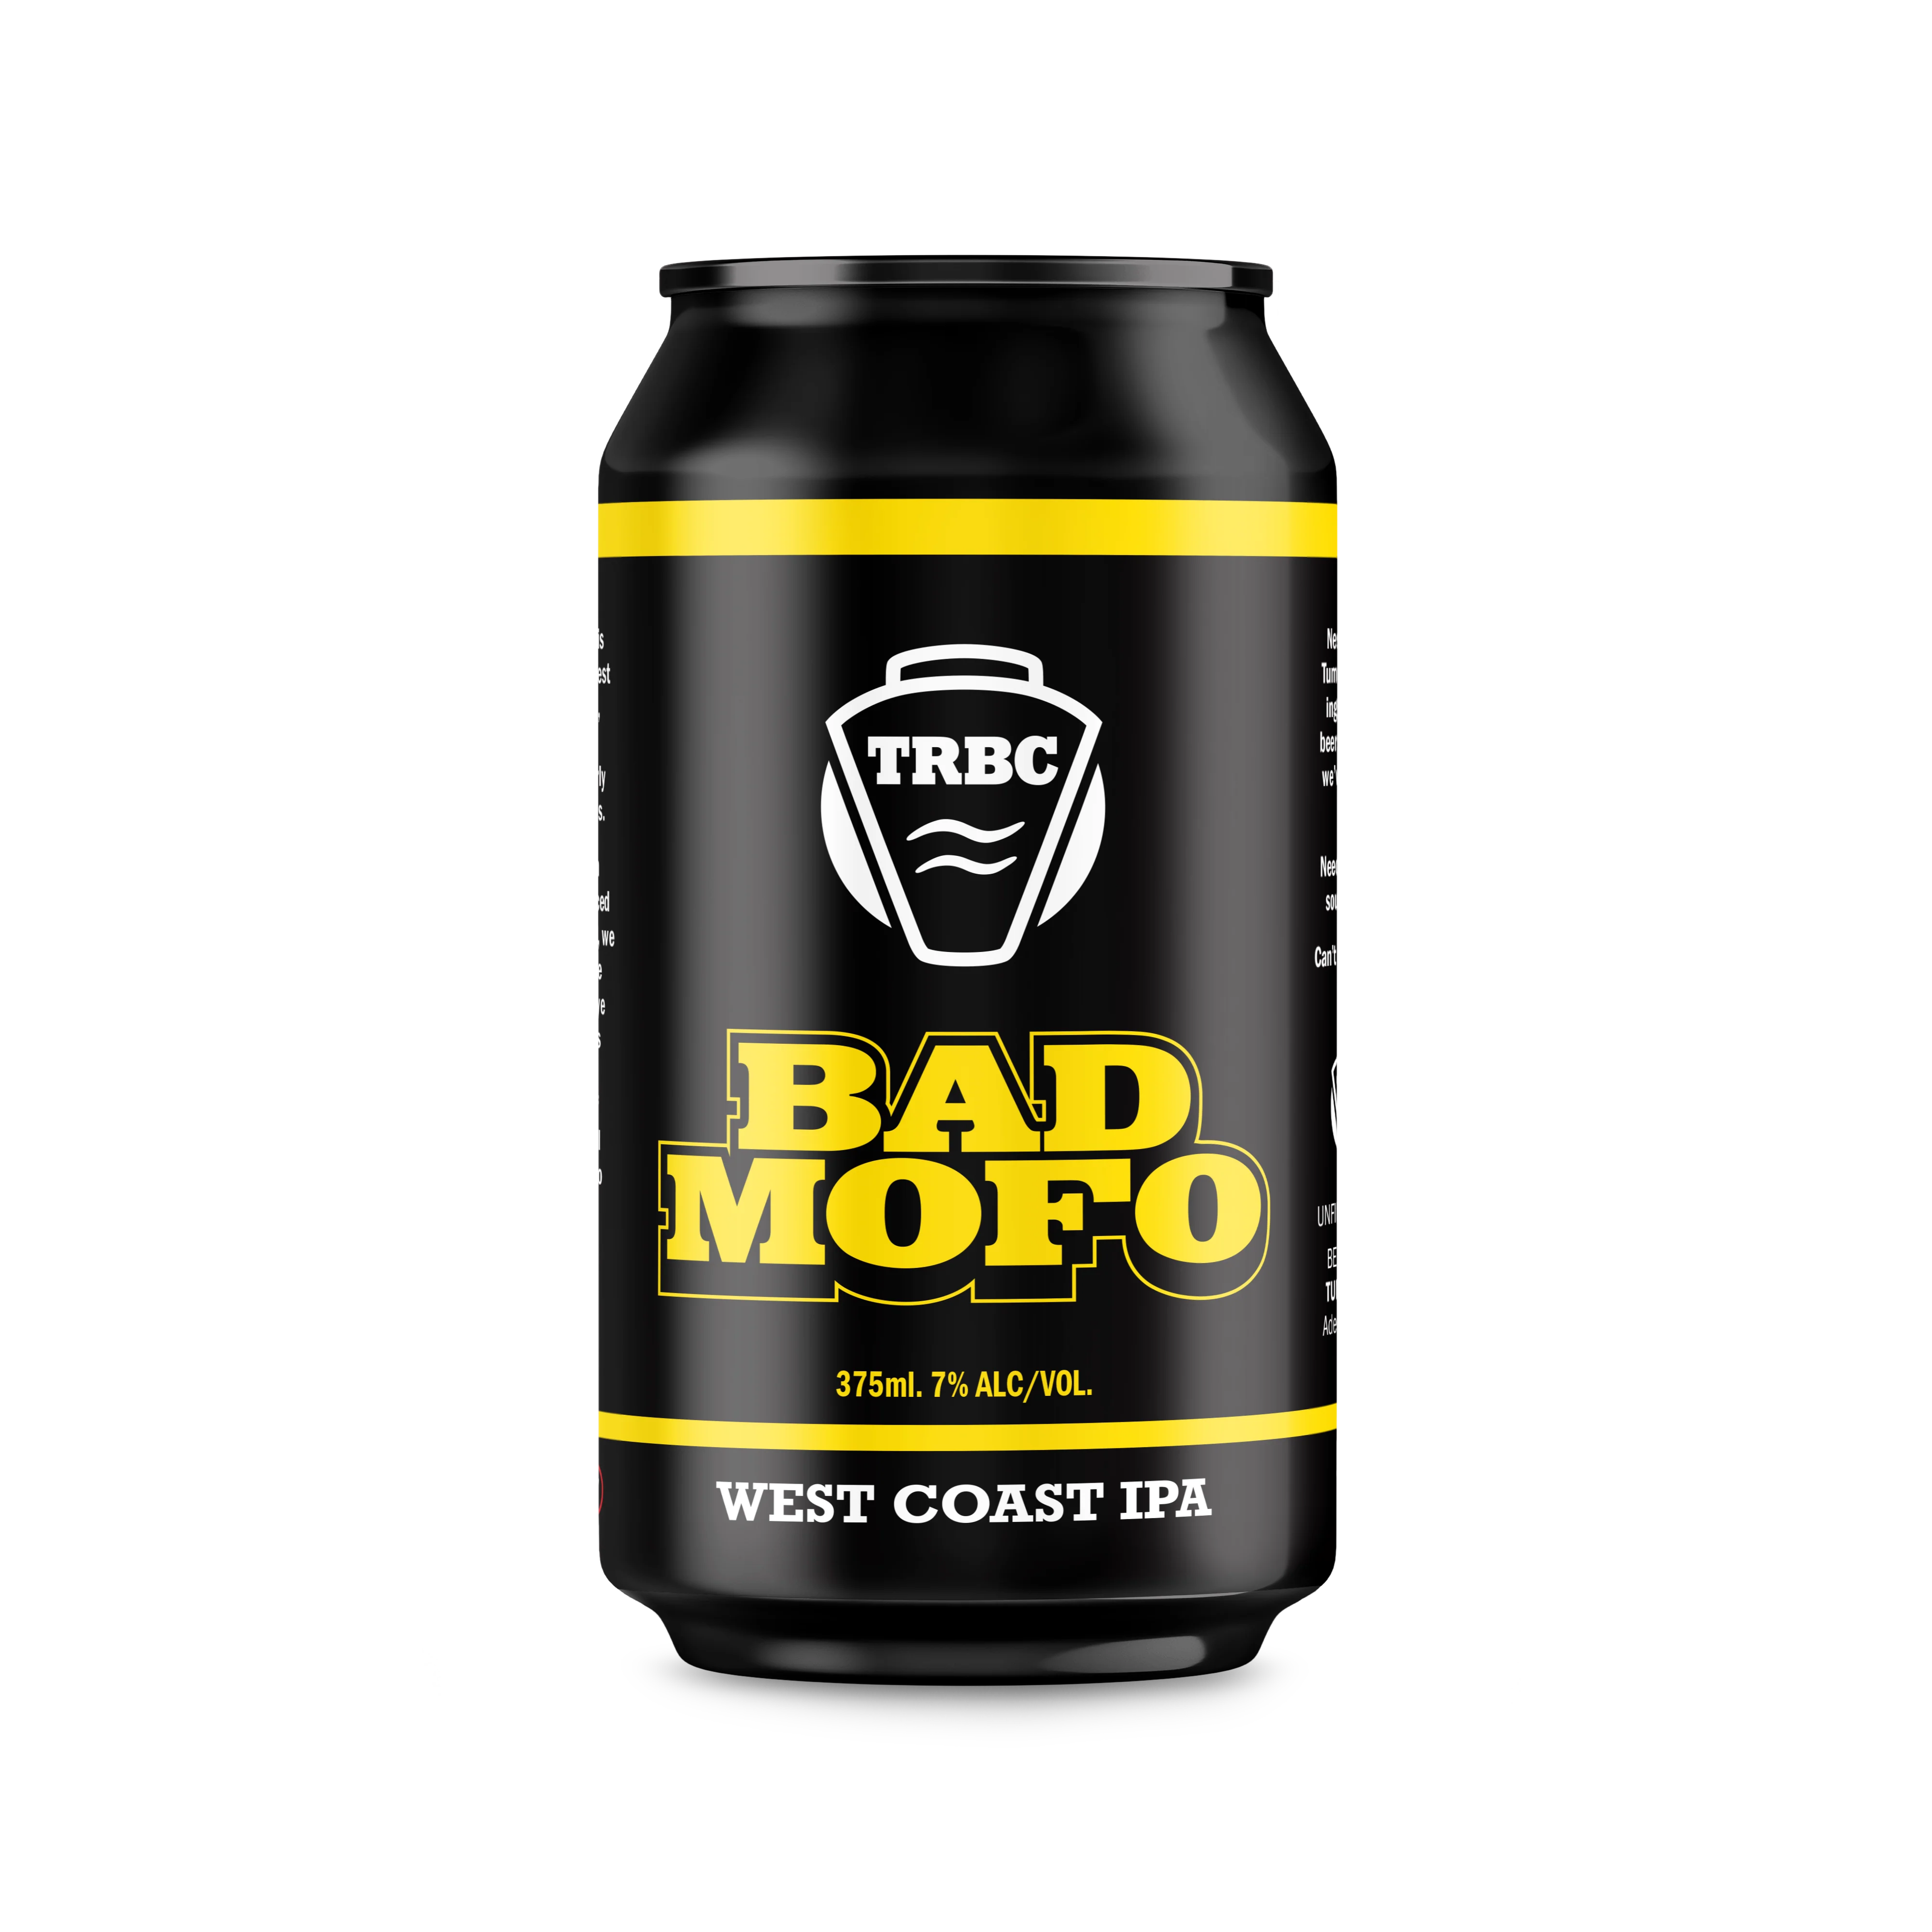 Bad Mofo West Coast IPA 7% ABV